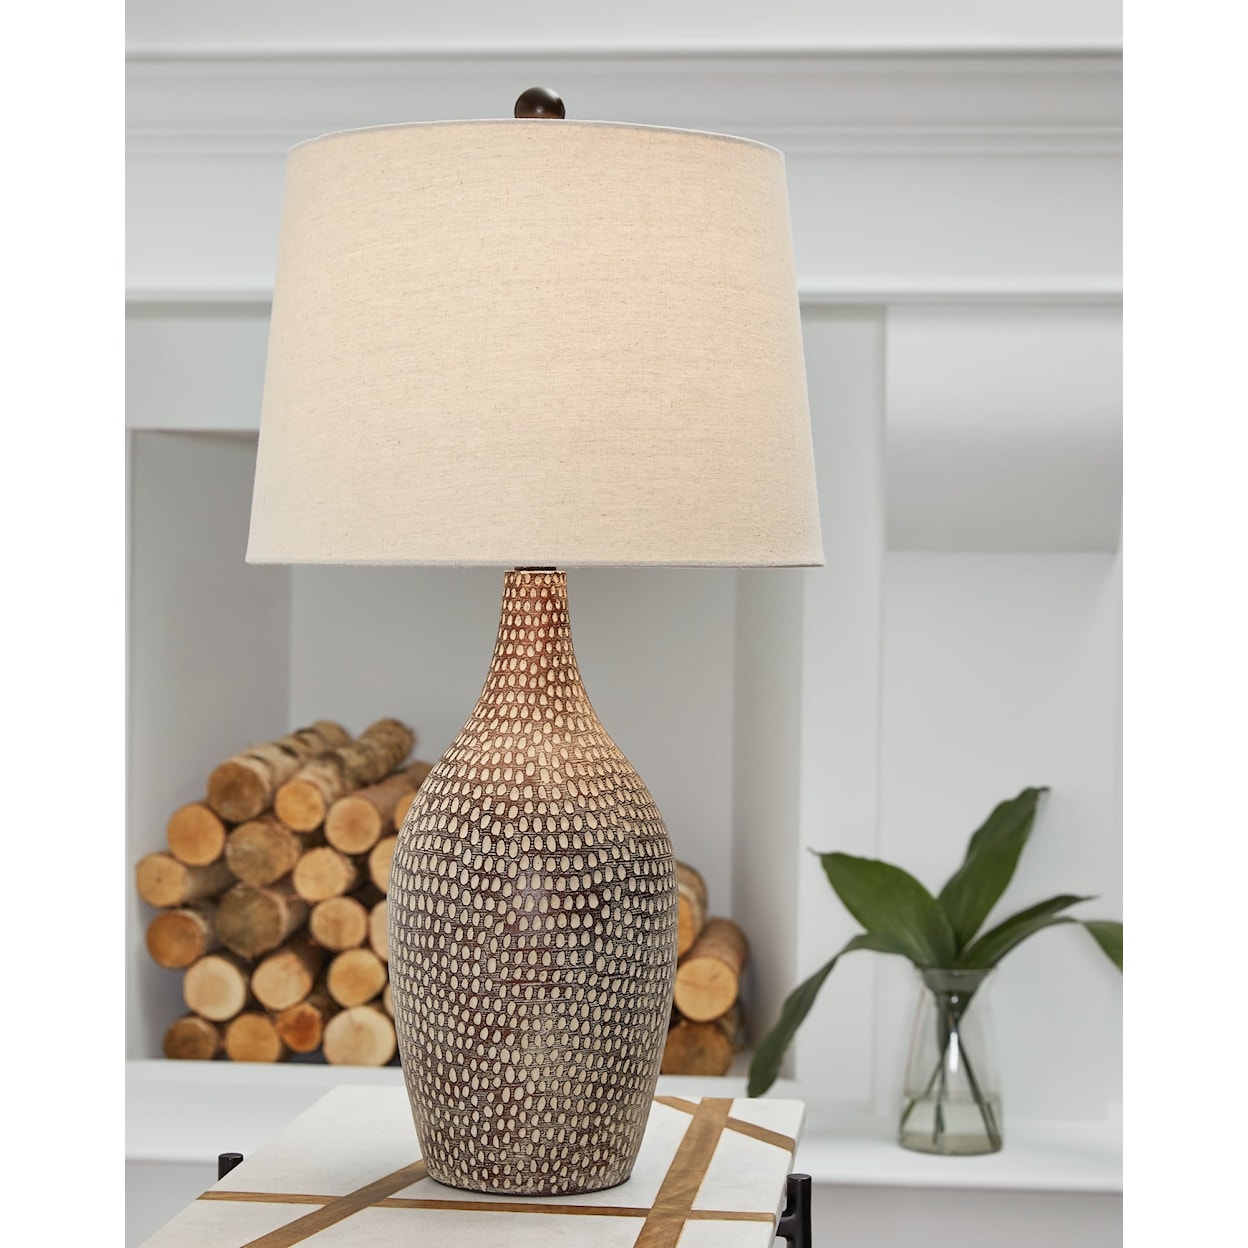 Ashley Furniture Signature Design Laelman Table Lamp (Set of 2)